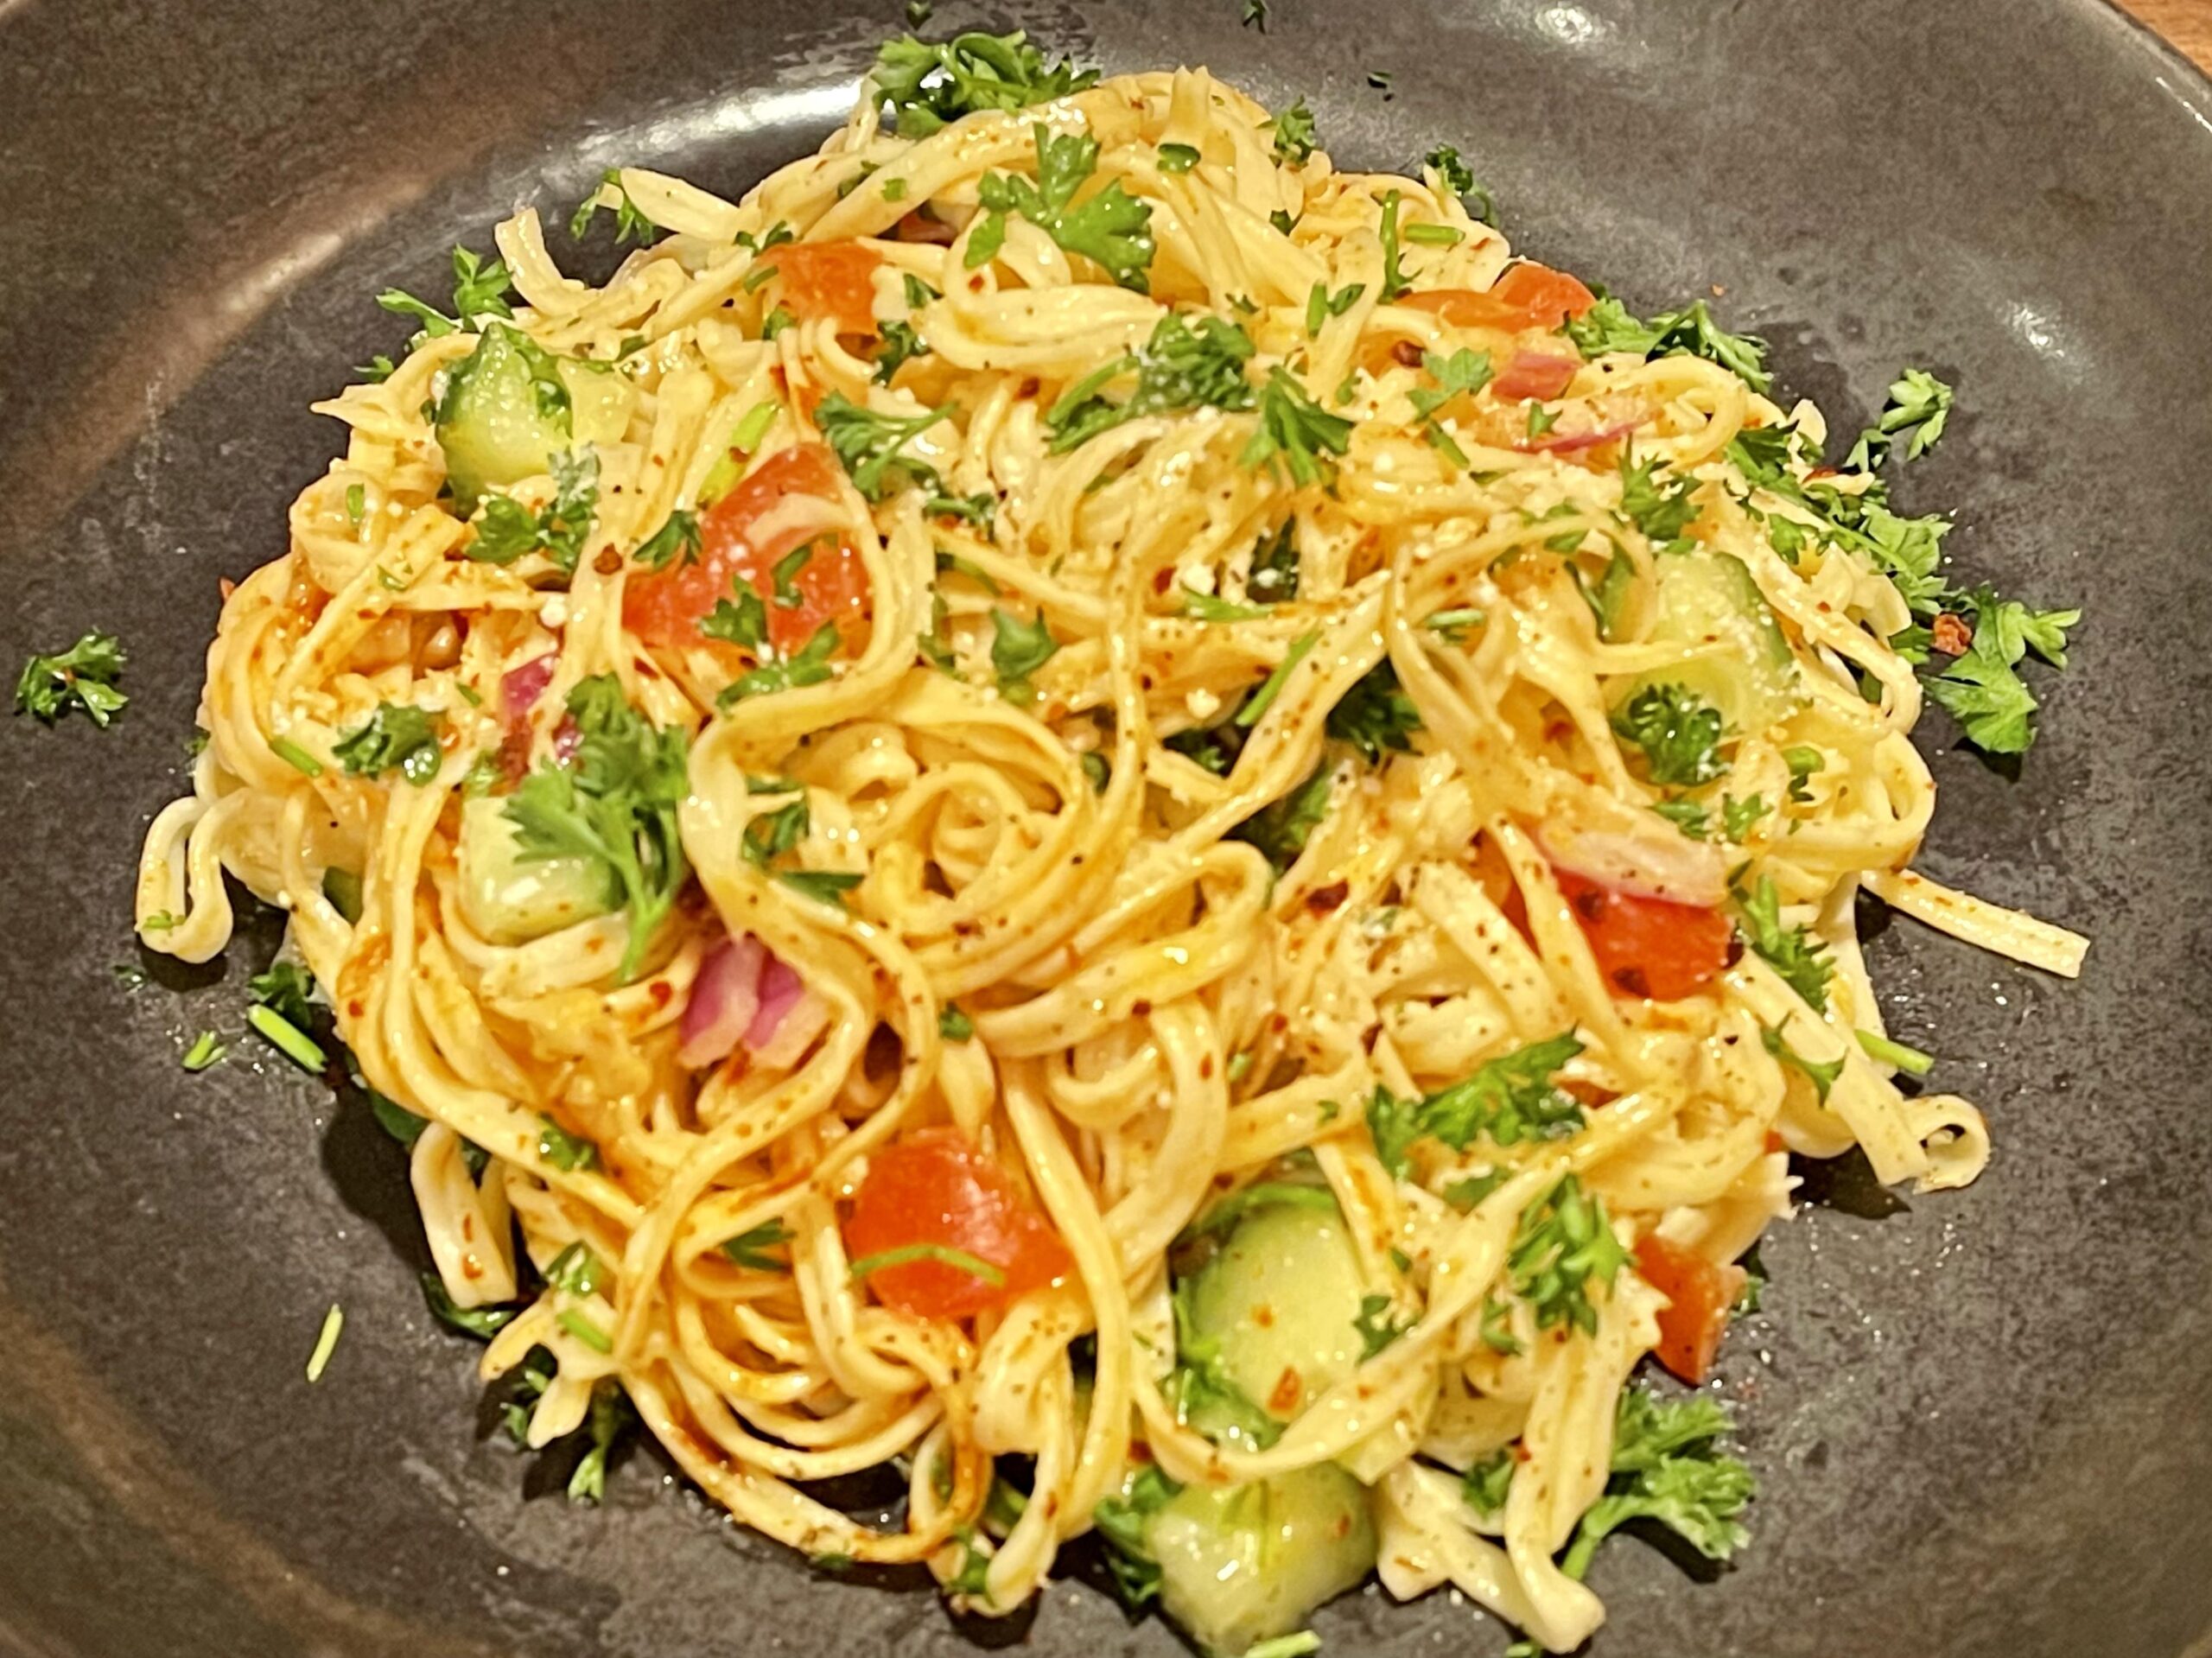 Luby's Cafeteria Spaghetti Salad